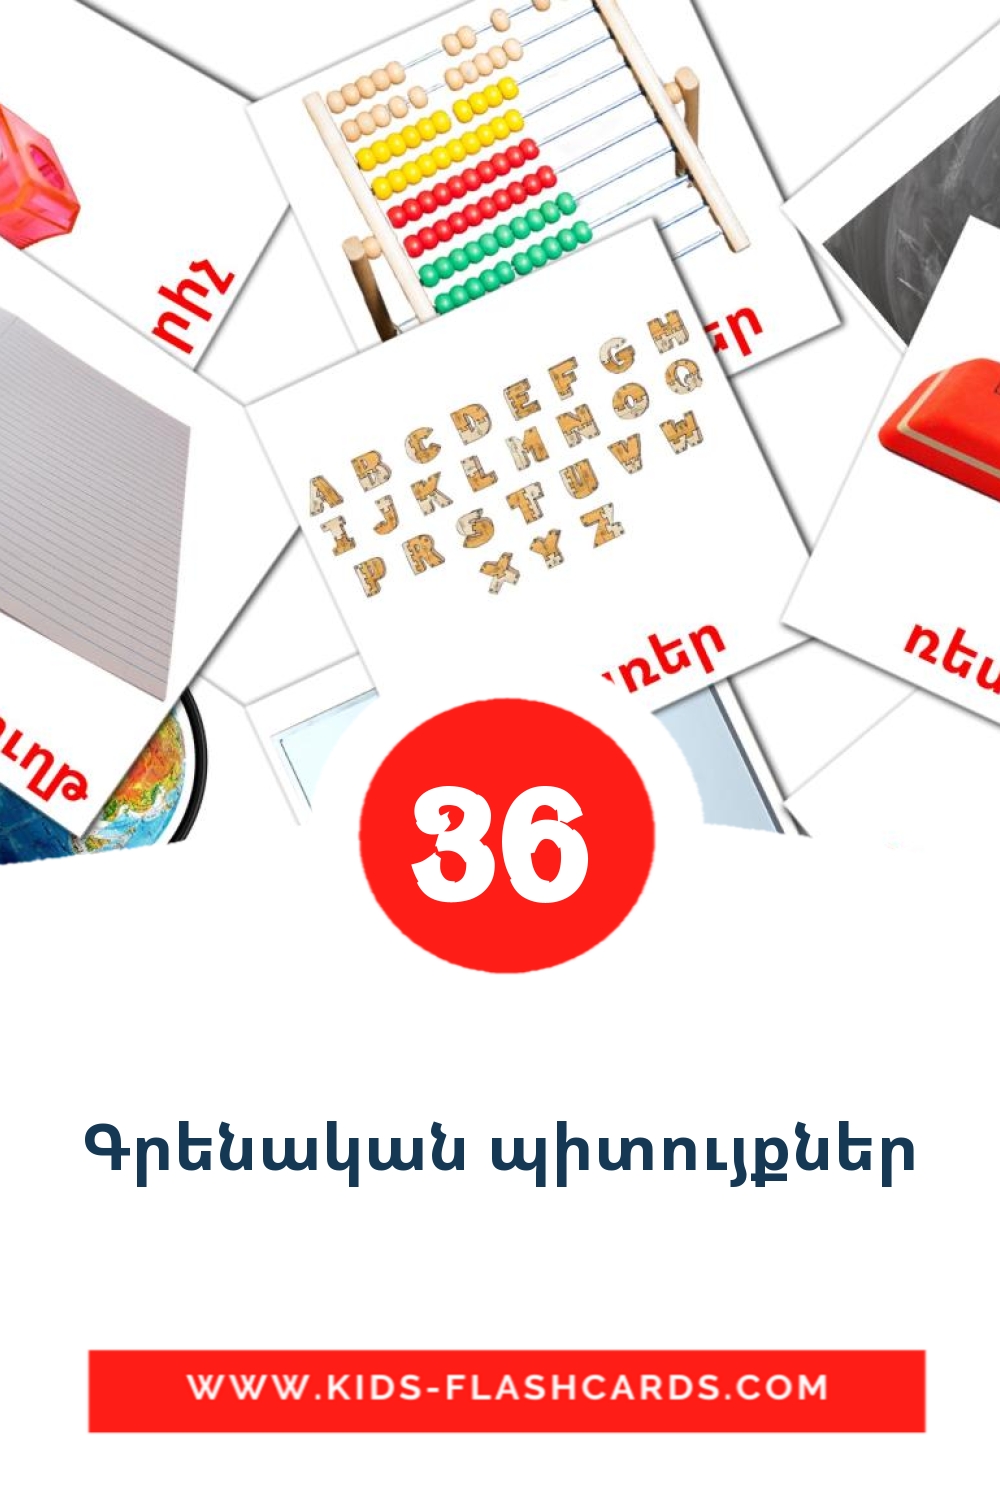 36 tarjetas didacticas de Գրենական պիտույքներ para el jardín de infancia en armenio